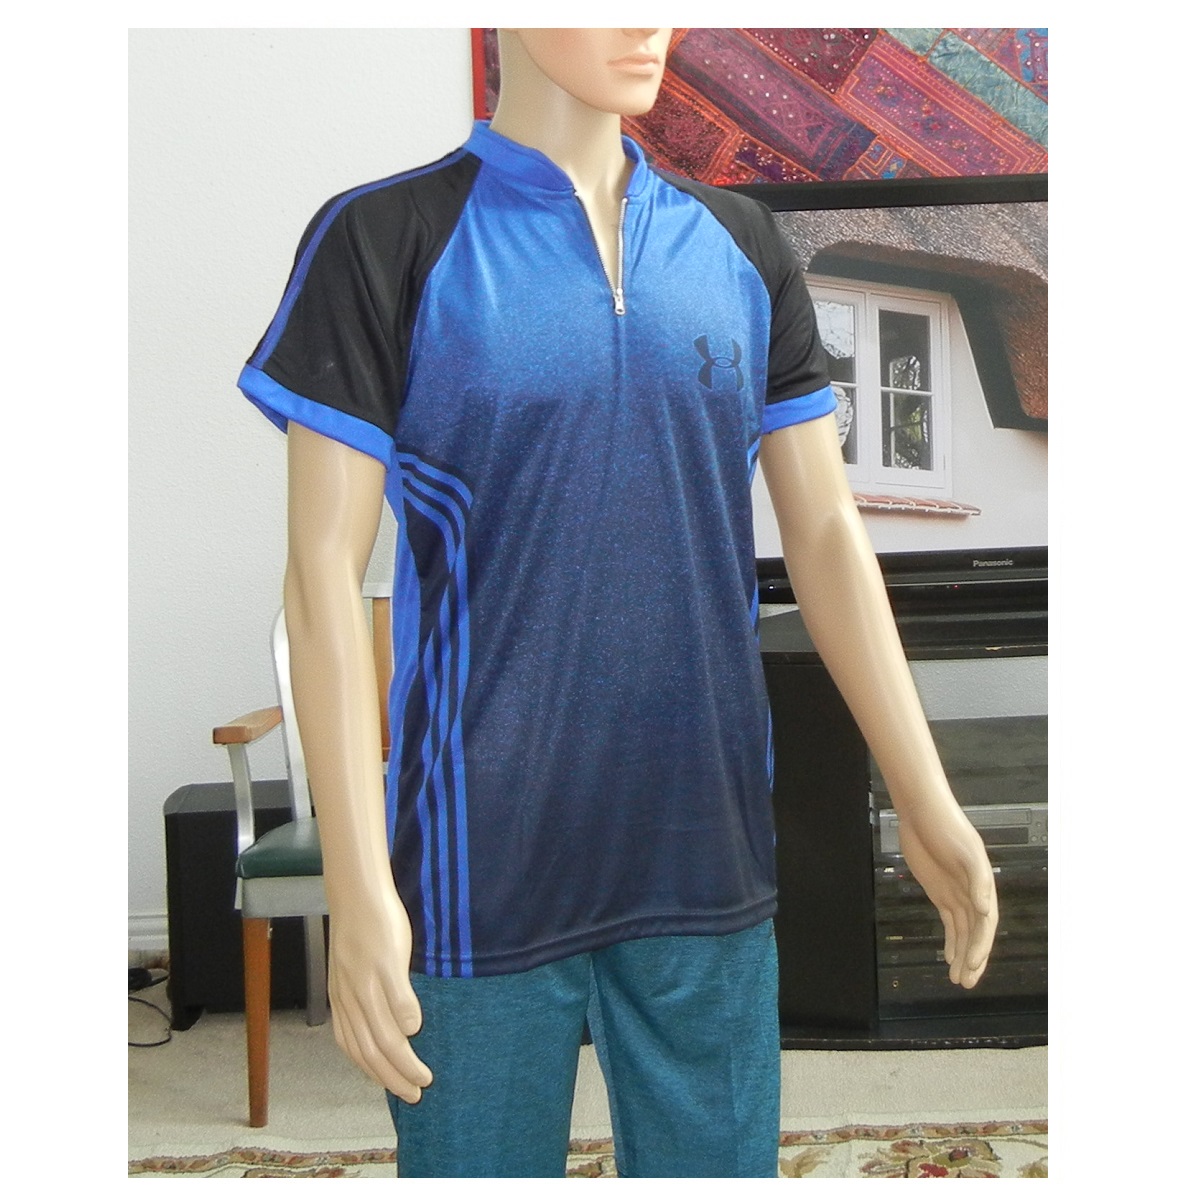 Sublimated T-Shirt for Men, Elegant Colorful gradient design with Stripes, blue and black